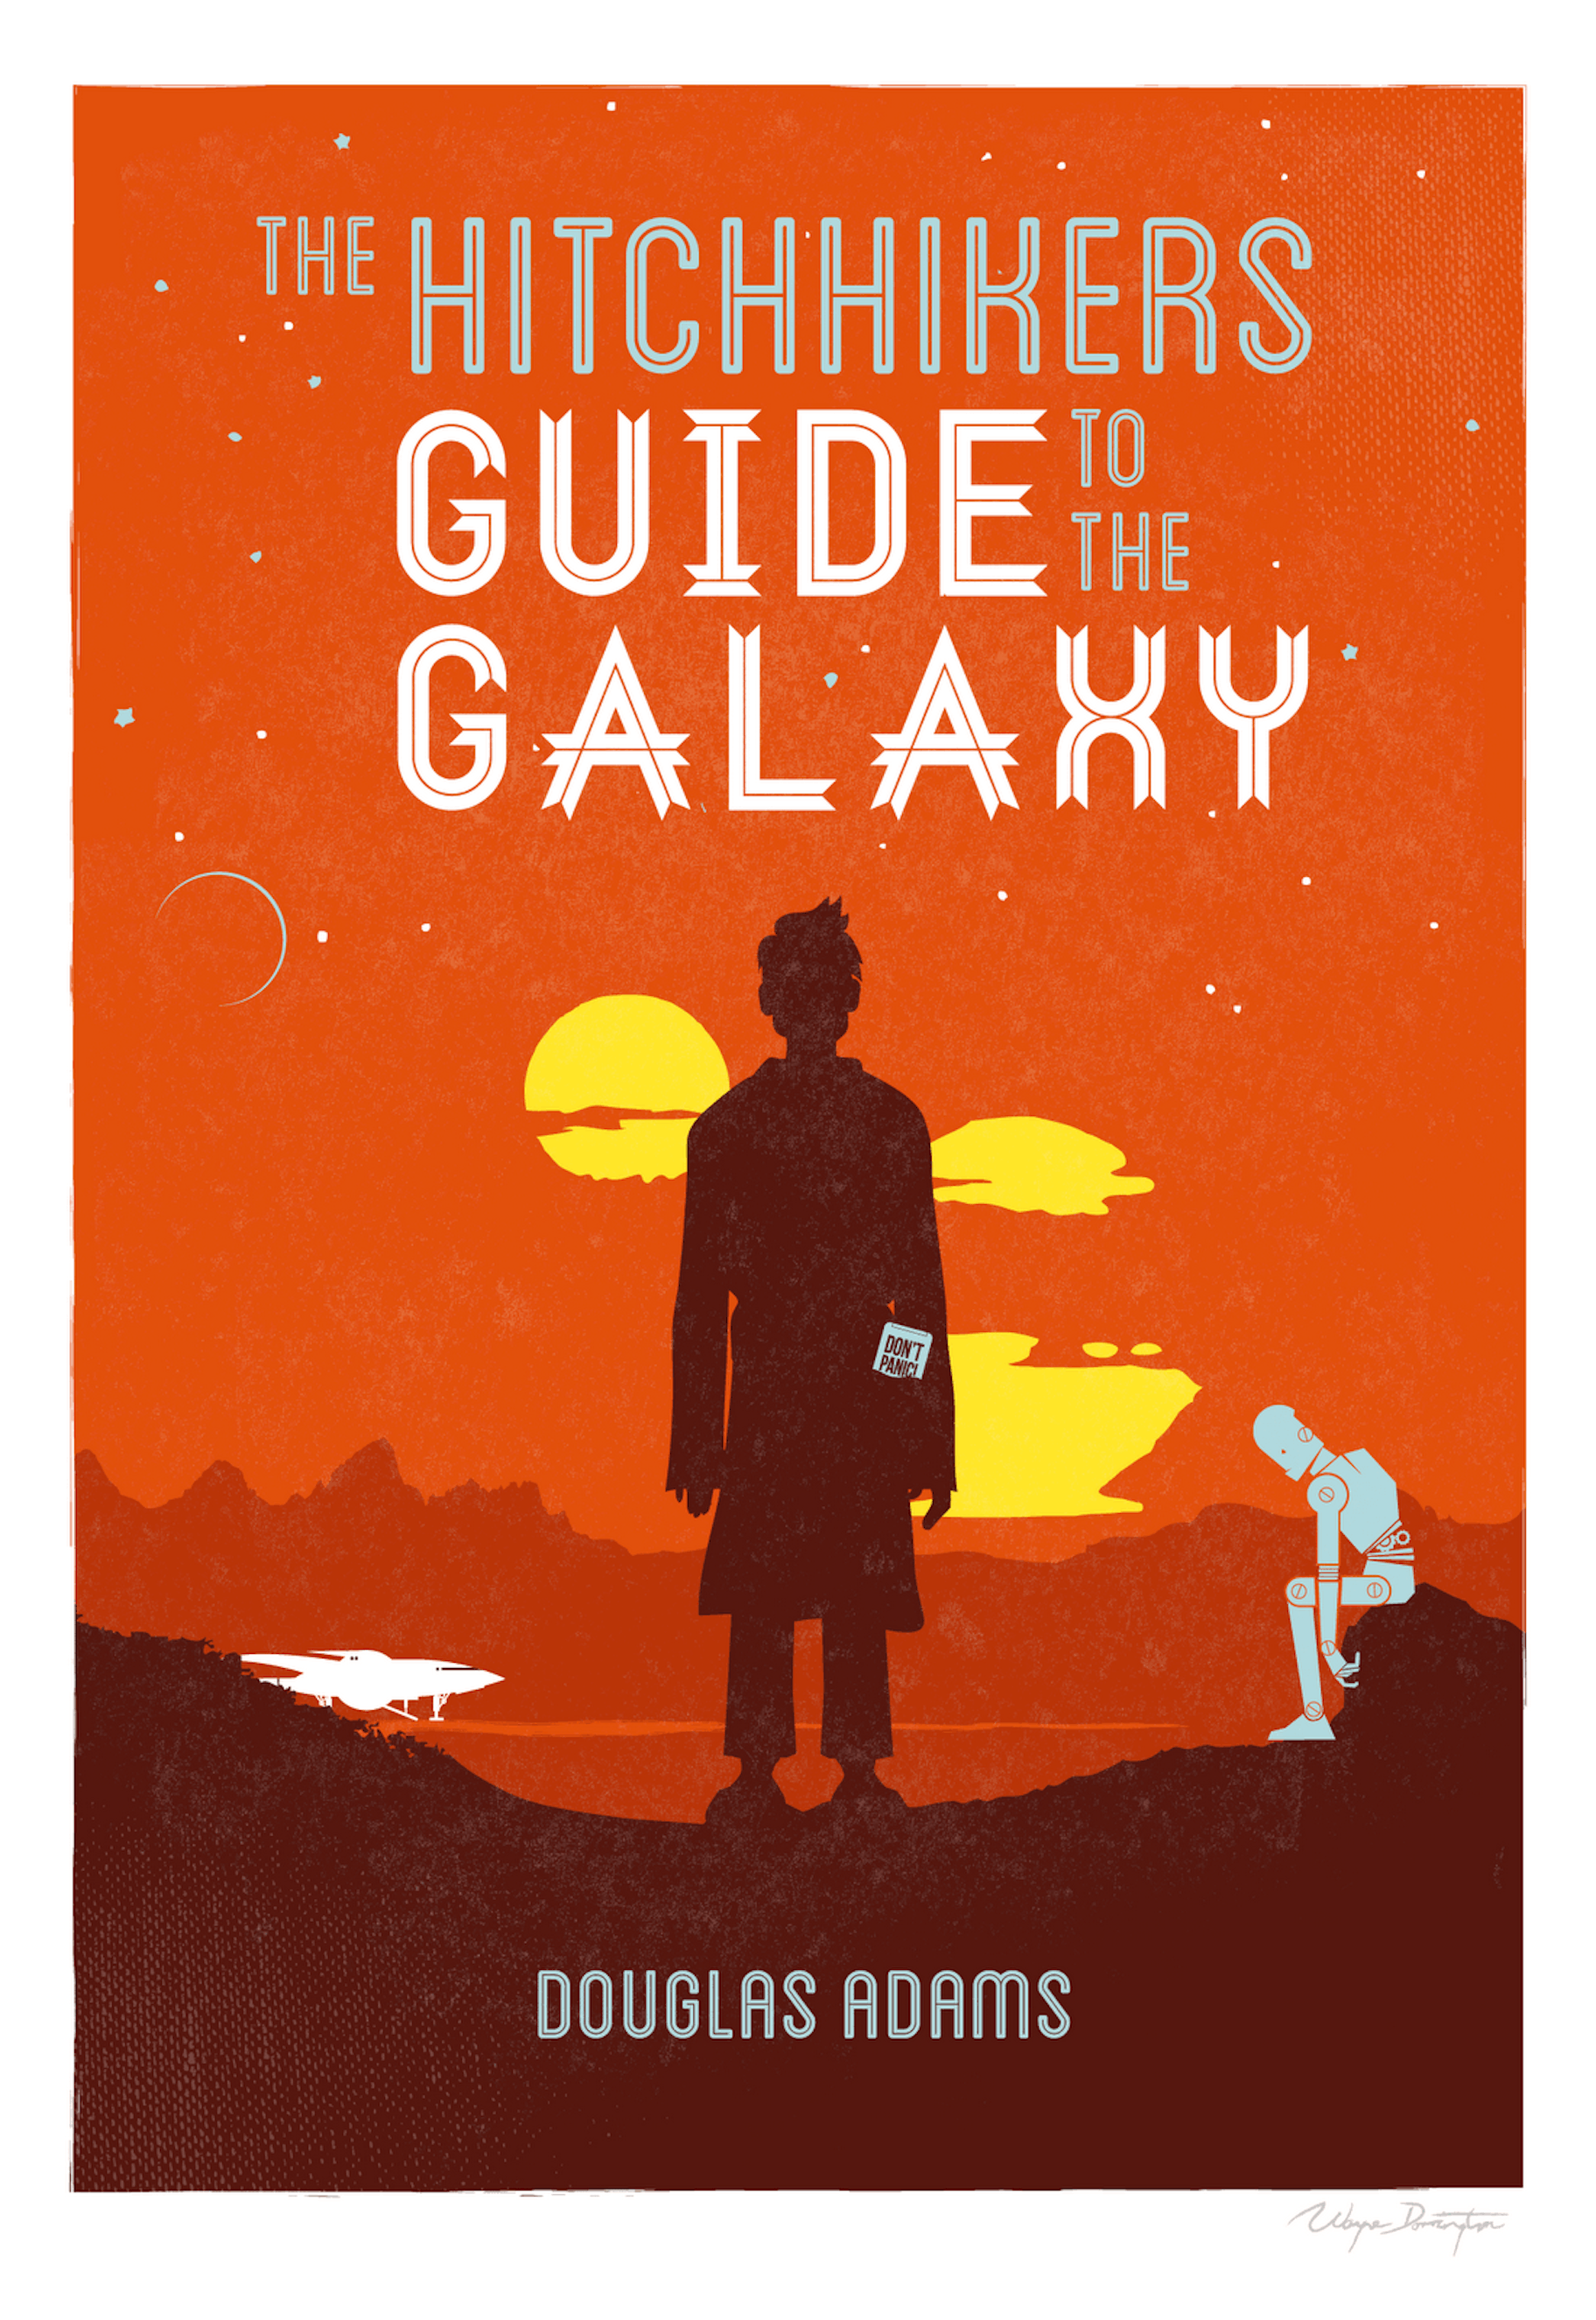 Le guide du routard de la galaxie - Douglas Adams